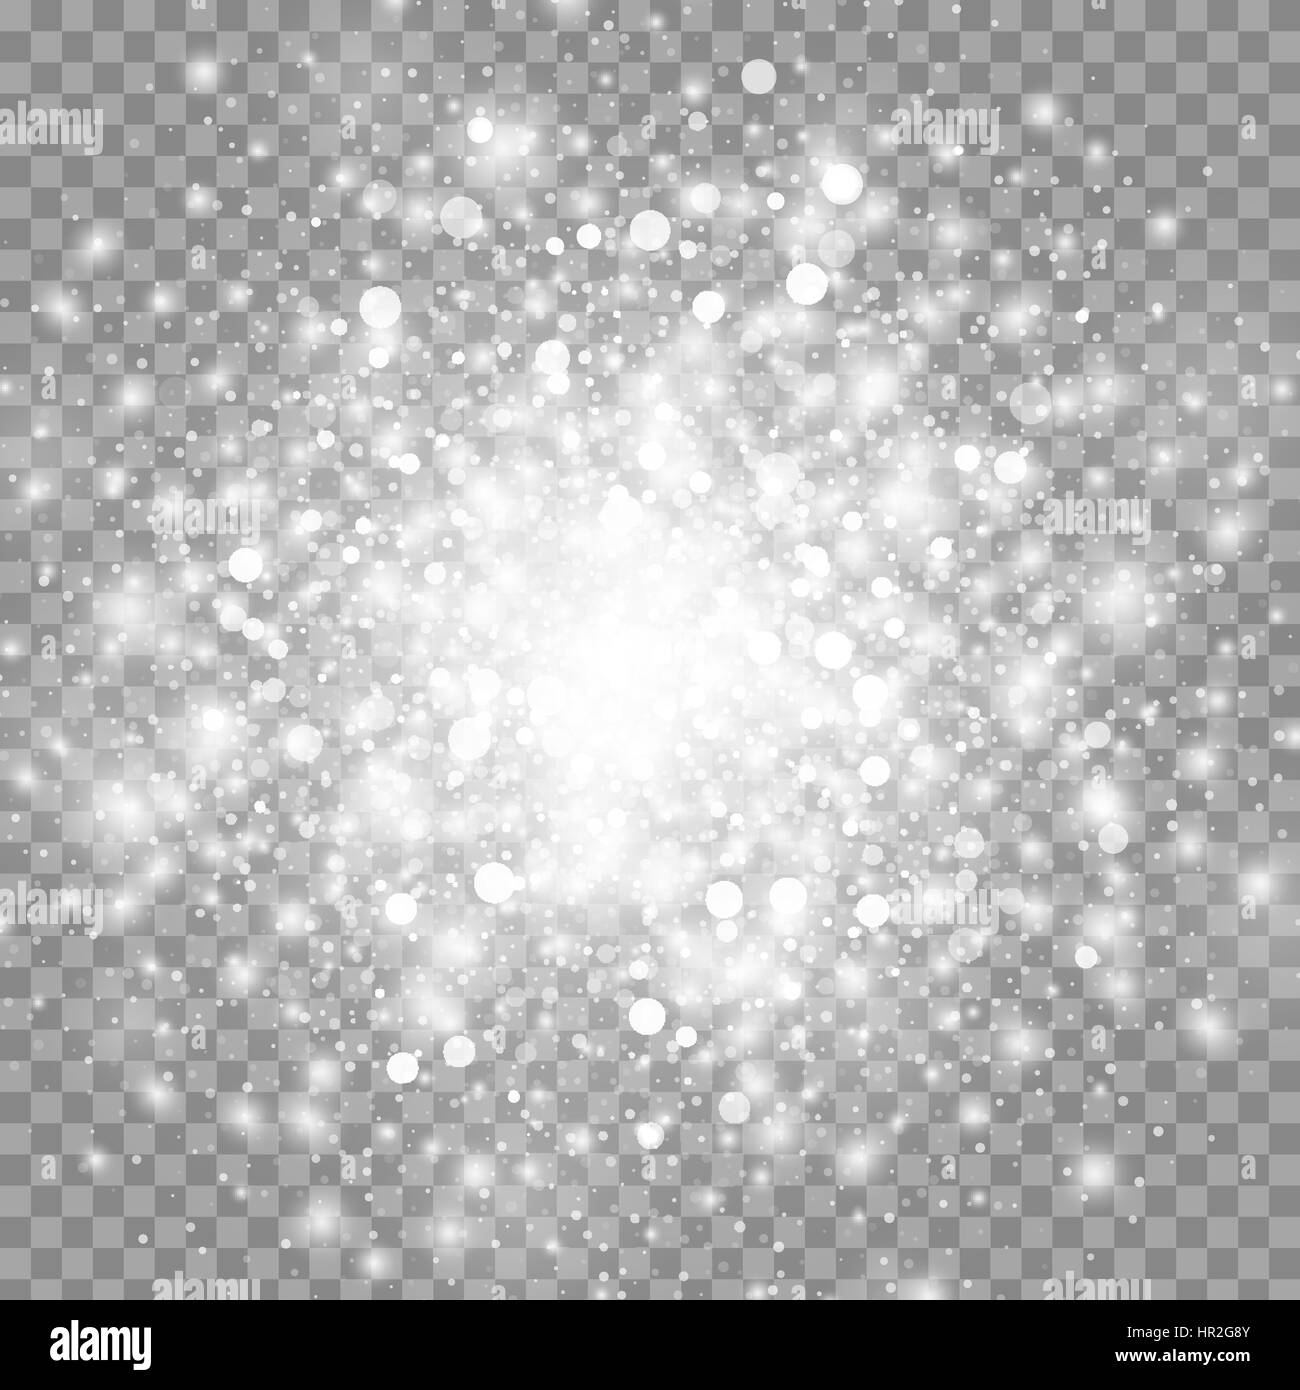 Vecteur Stock Sparkling magic light effect isolated on black background